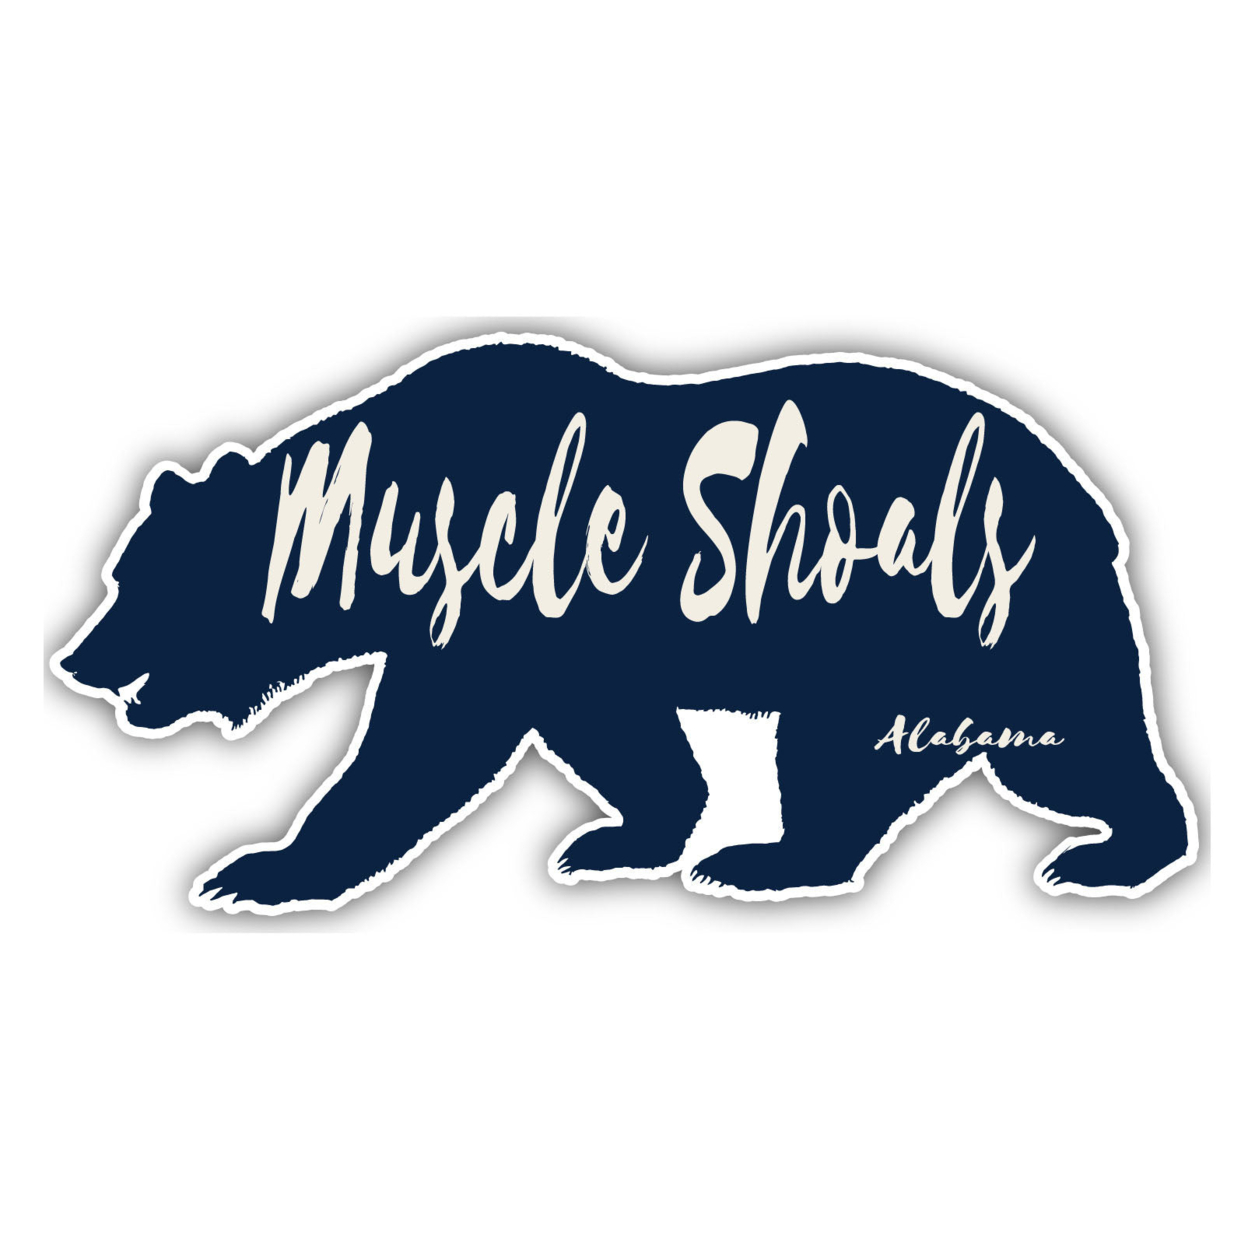 Muscle Shoals Alabama Souvenir Decorative Stickers (Choose Theme And Size) - Single Unit, 4-Inch, Bear